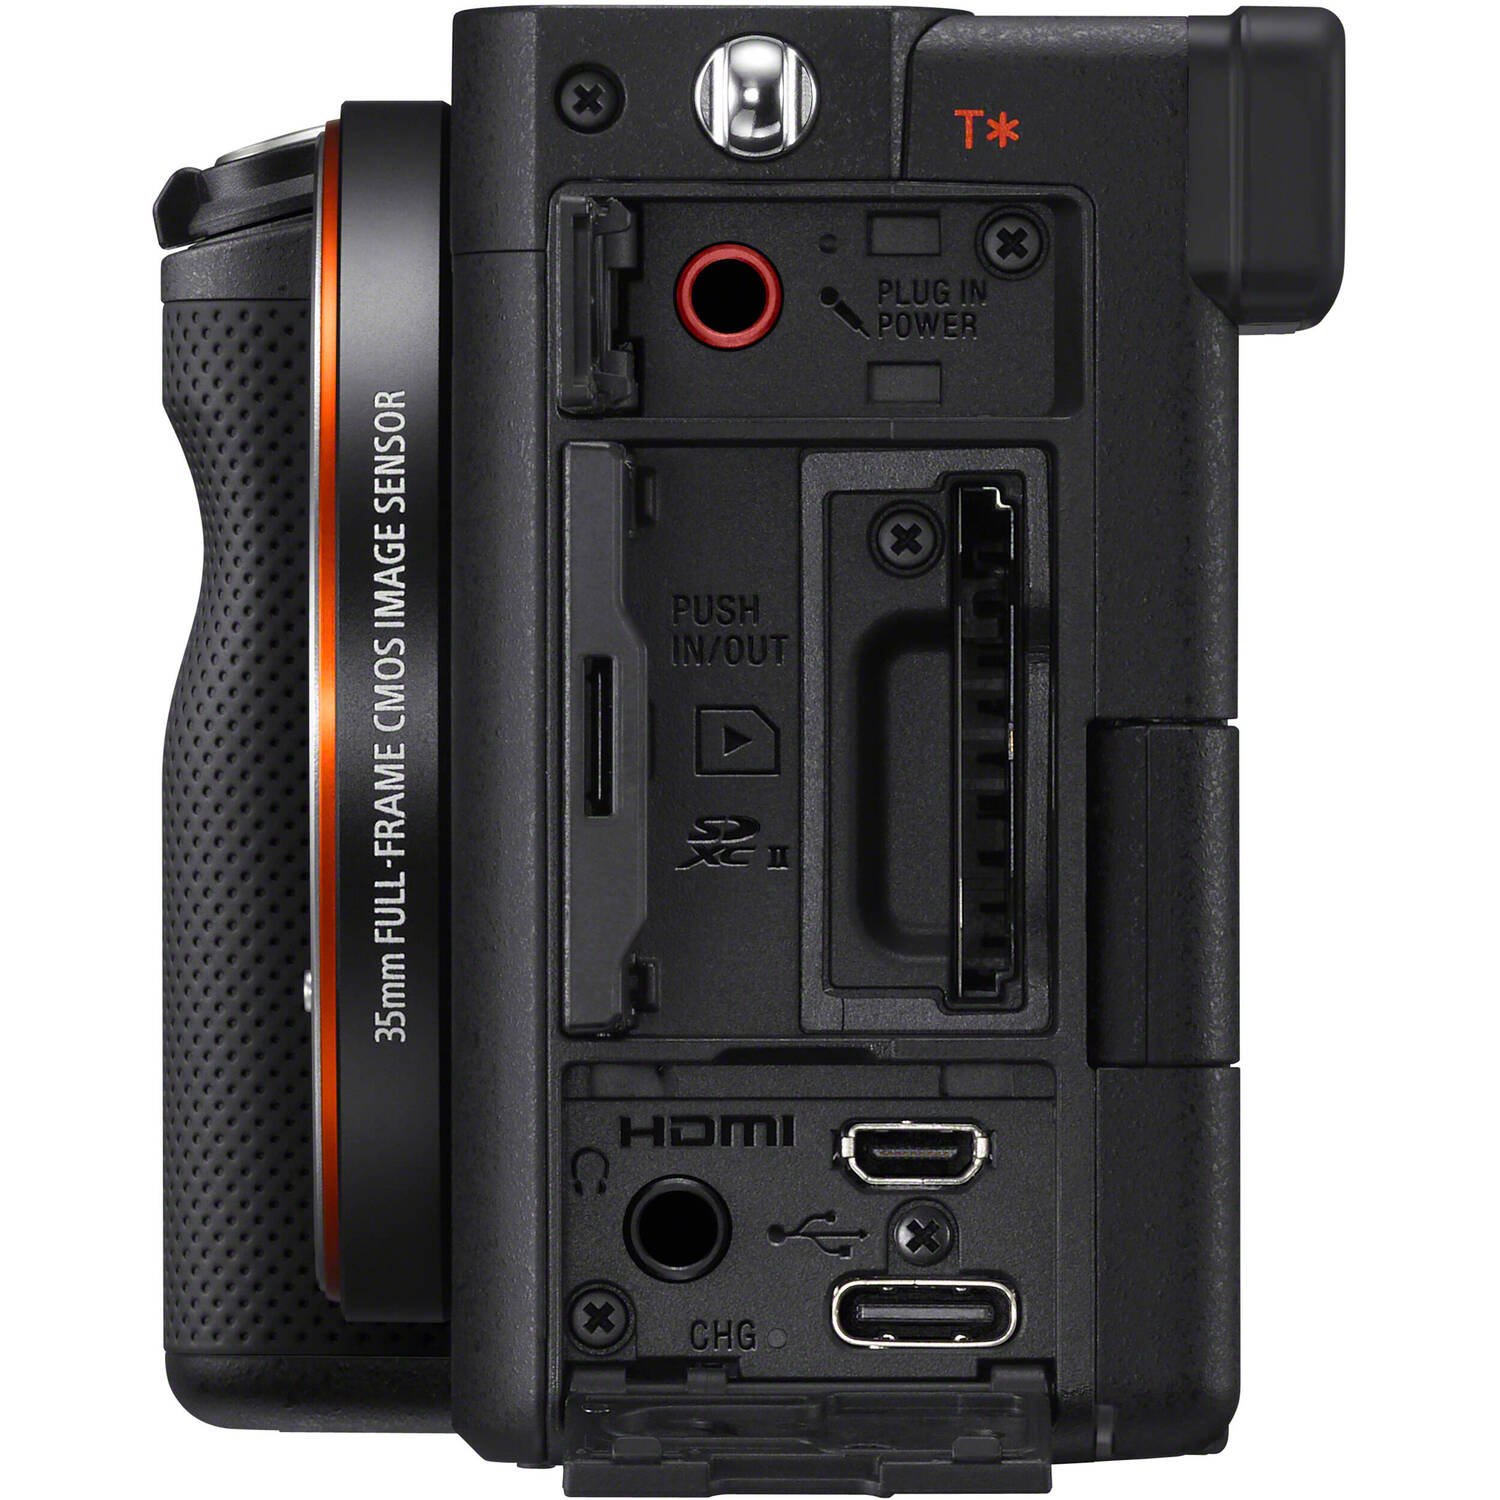 Фотоаппарат Sony Alpha ILCE-7CL Kit FE 28-60mm f/4-5.6, черный